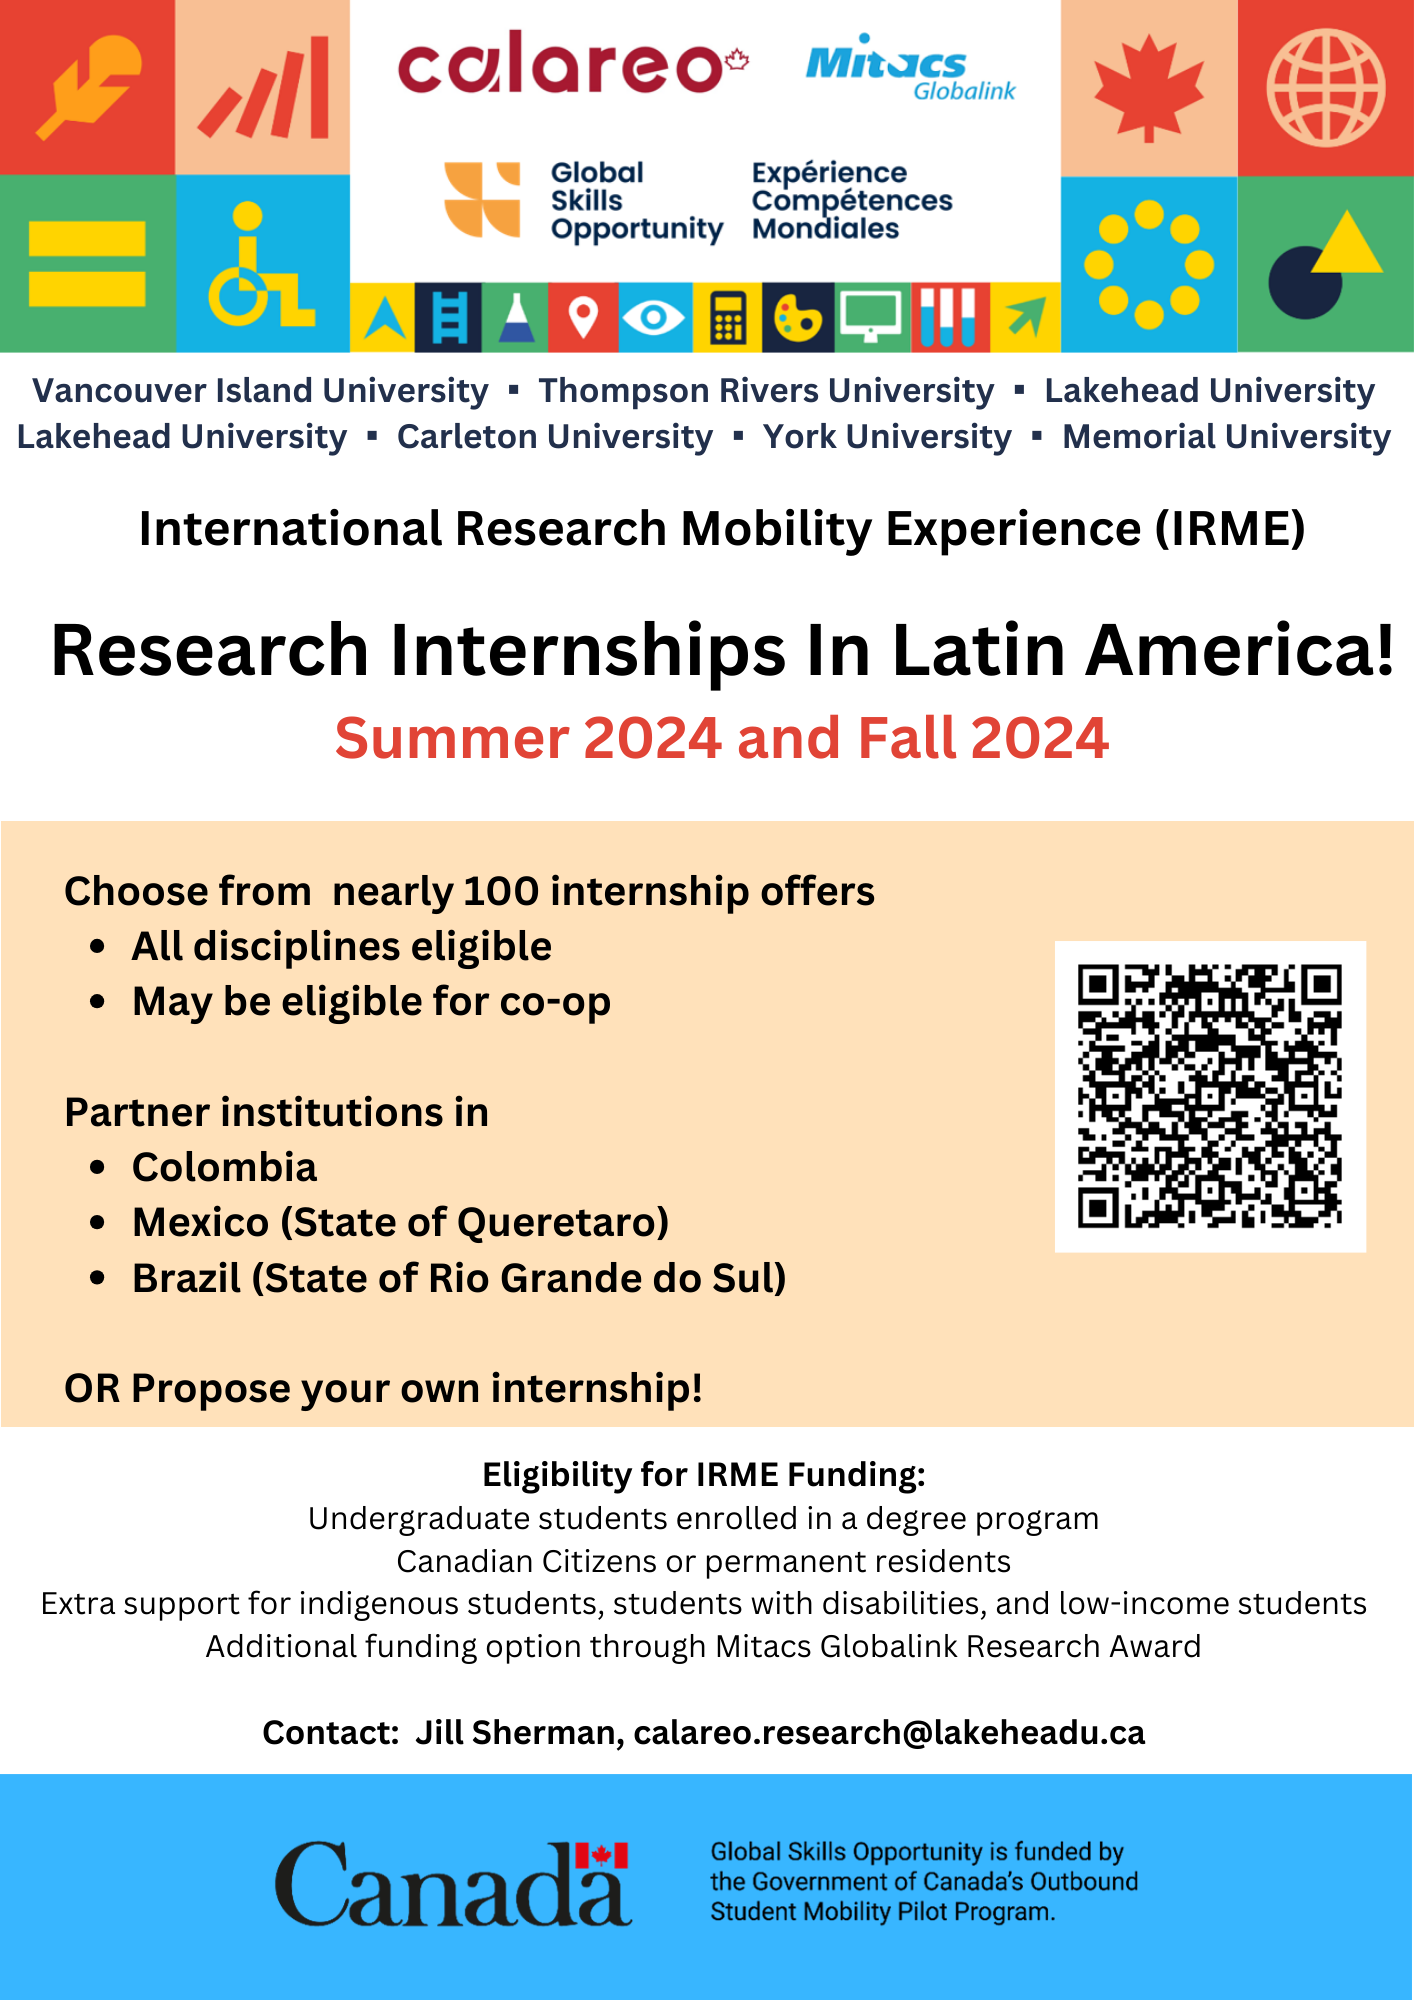 Research internships in Latin America